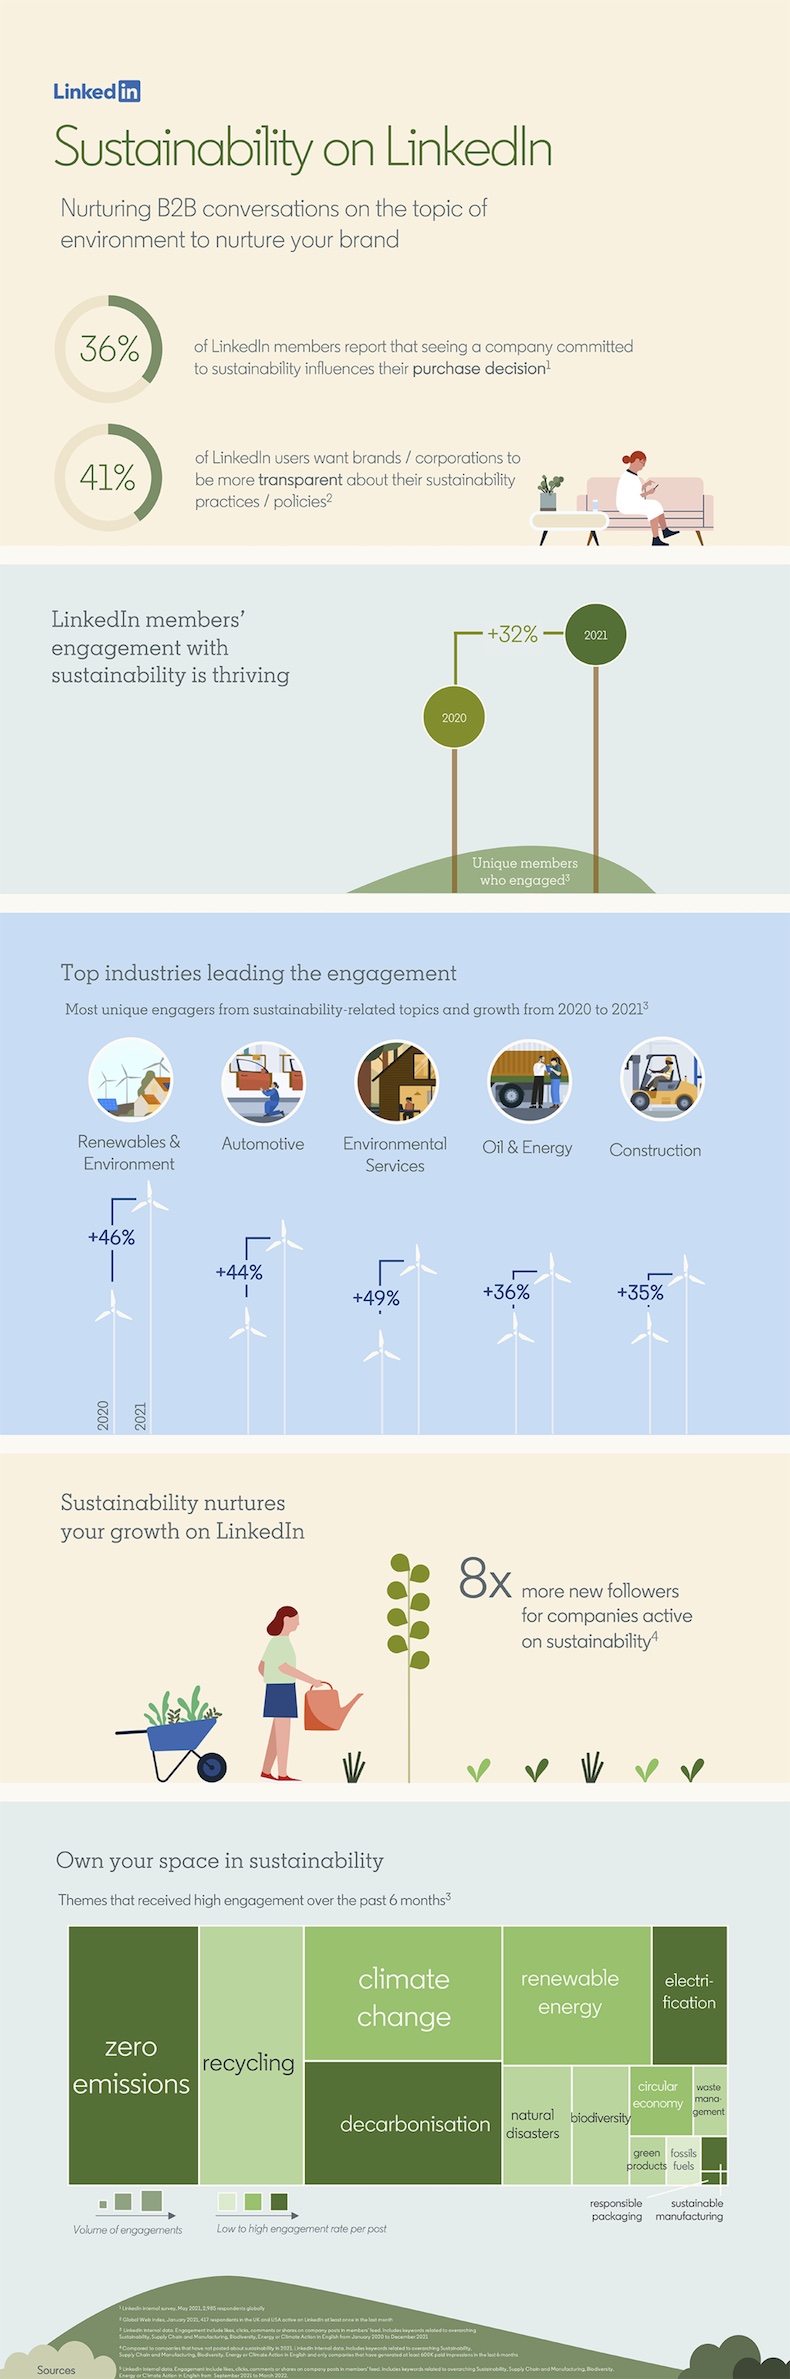 Sustainability on LinkedIn infographic